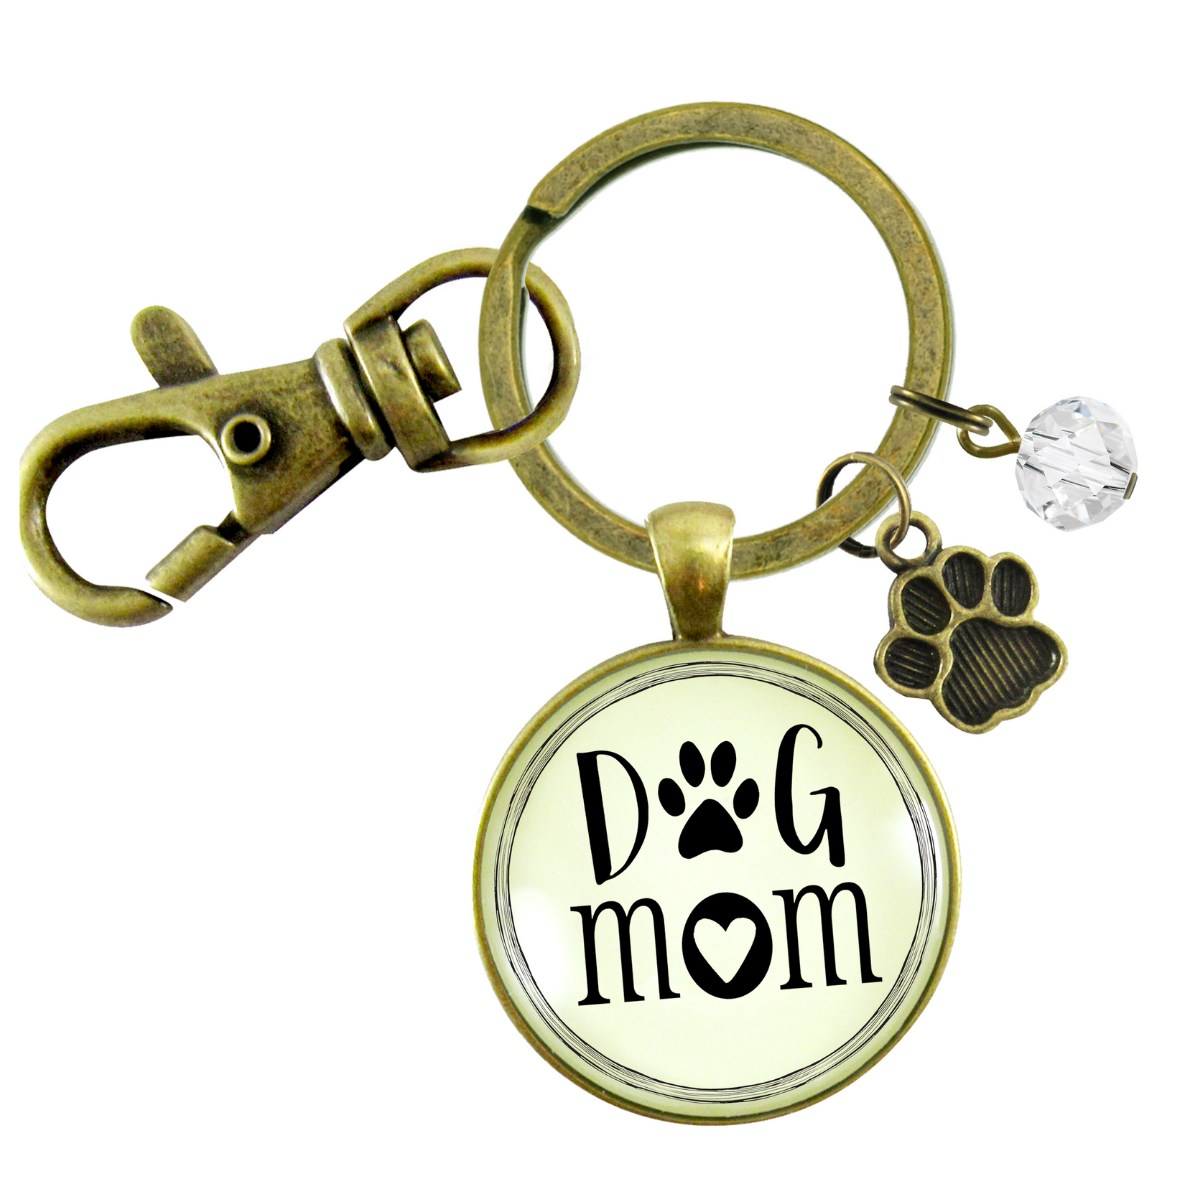 Dog Mom Keychain for Fur Mama Bronze Pendant Key Ring Pet Paw Charm - Gutsy Goodness Handmade Jewelry;Dog Mom Keychain For Fur Mama Bronze Pendant Key Ring Pet Paw Charm - Gutsy Goodness Handmade Jewelry Gifts